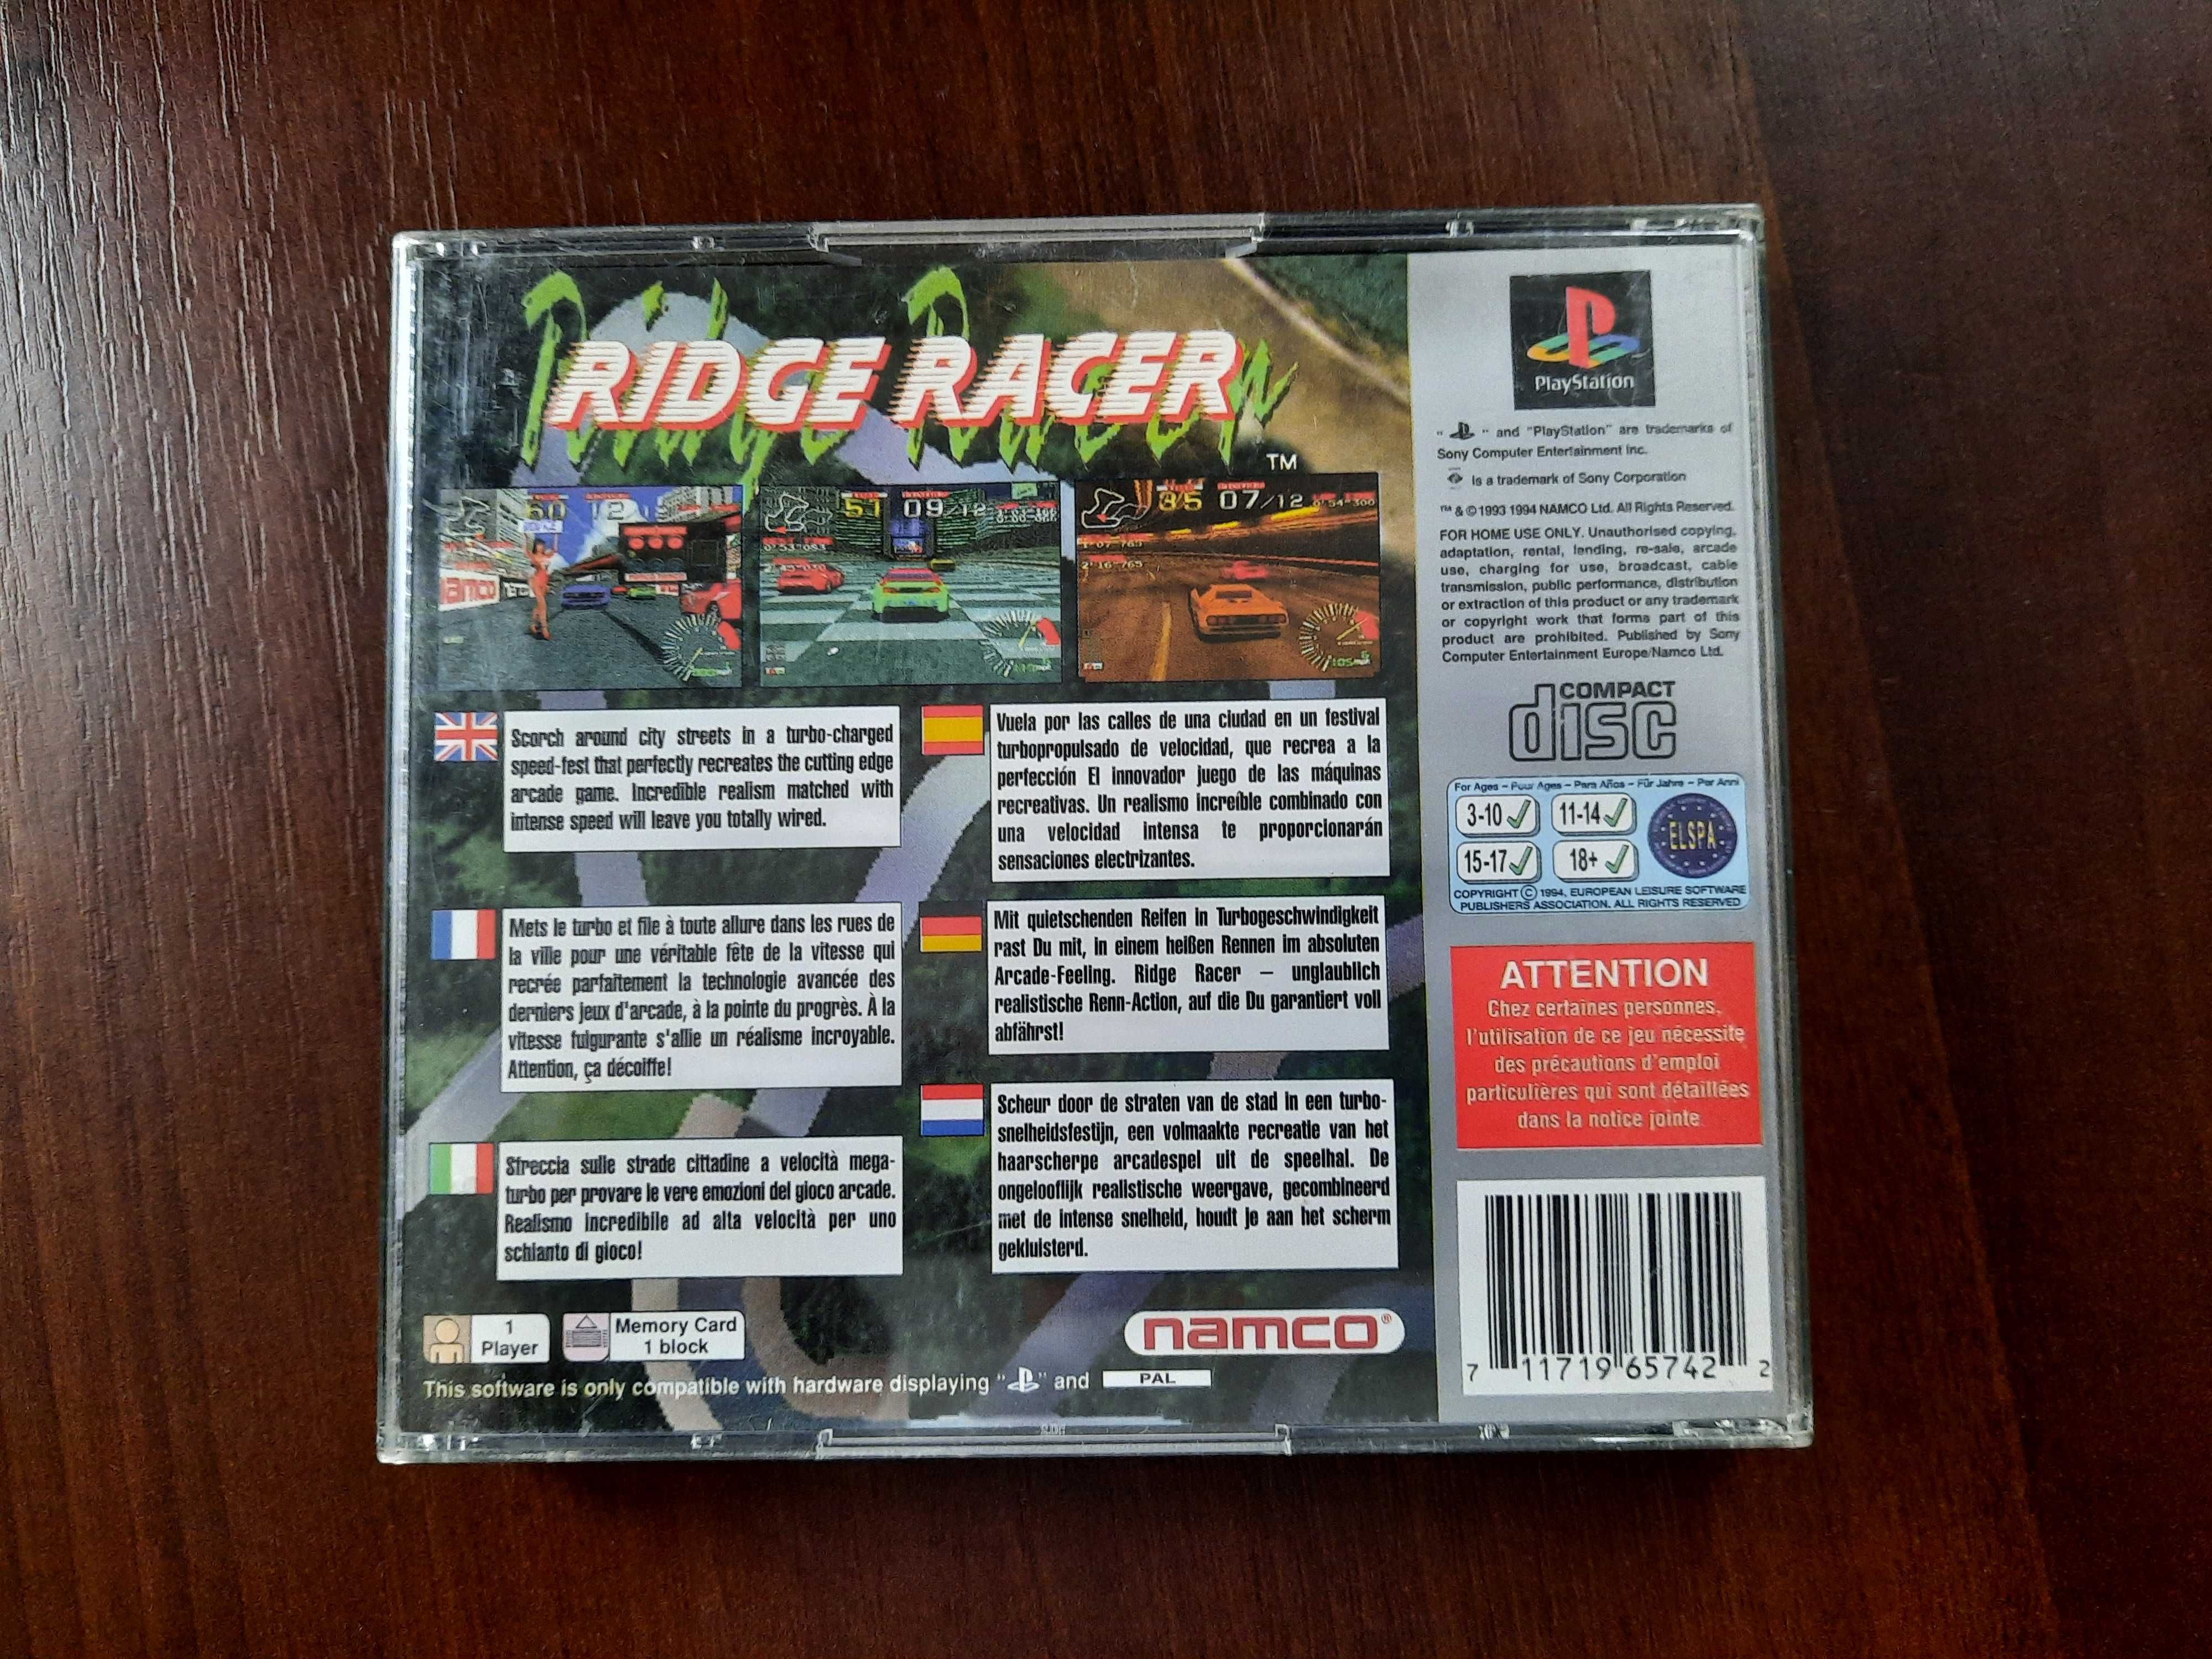 Ridge Racer PSX ps1